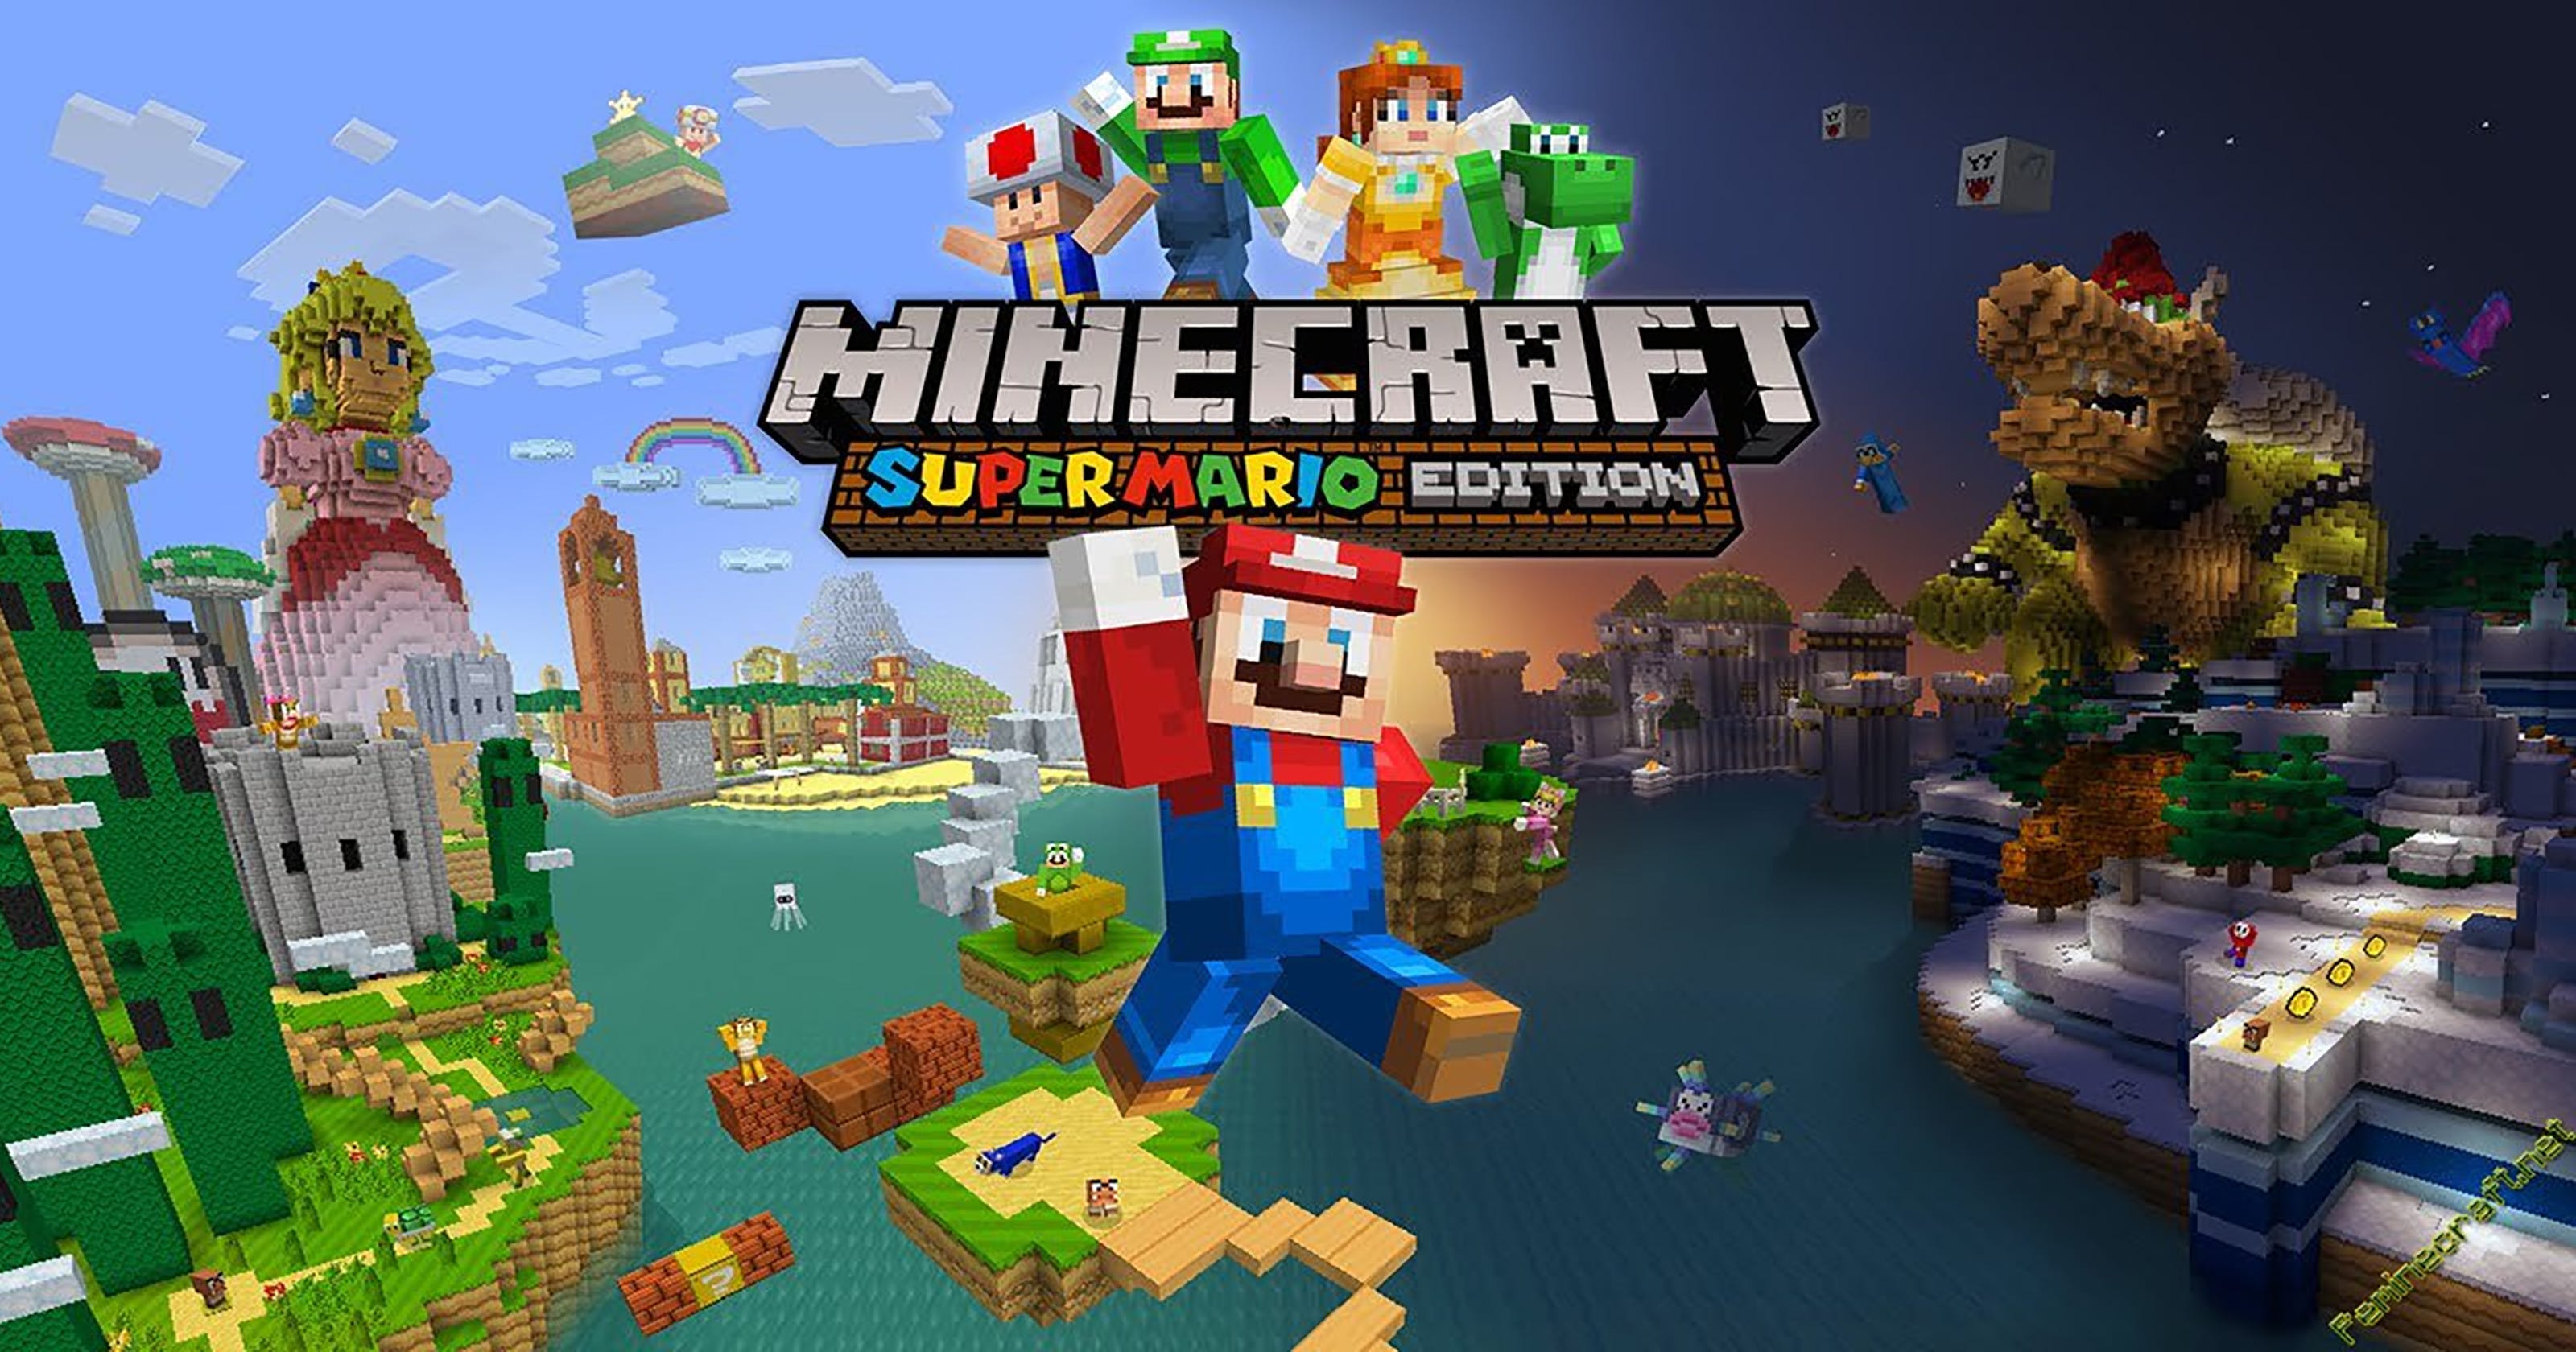 Minecraft: Wii U Edition review | Technobubble